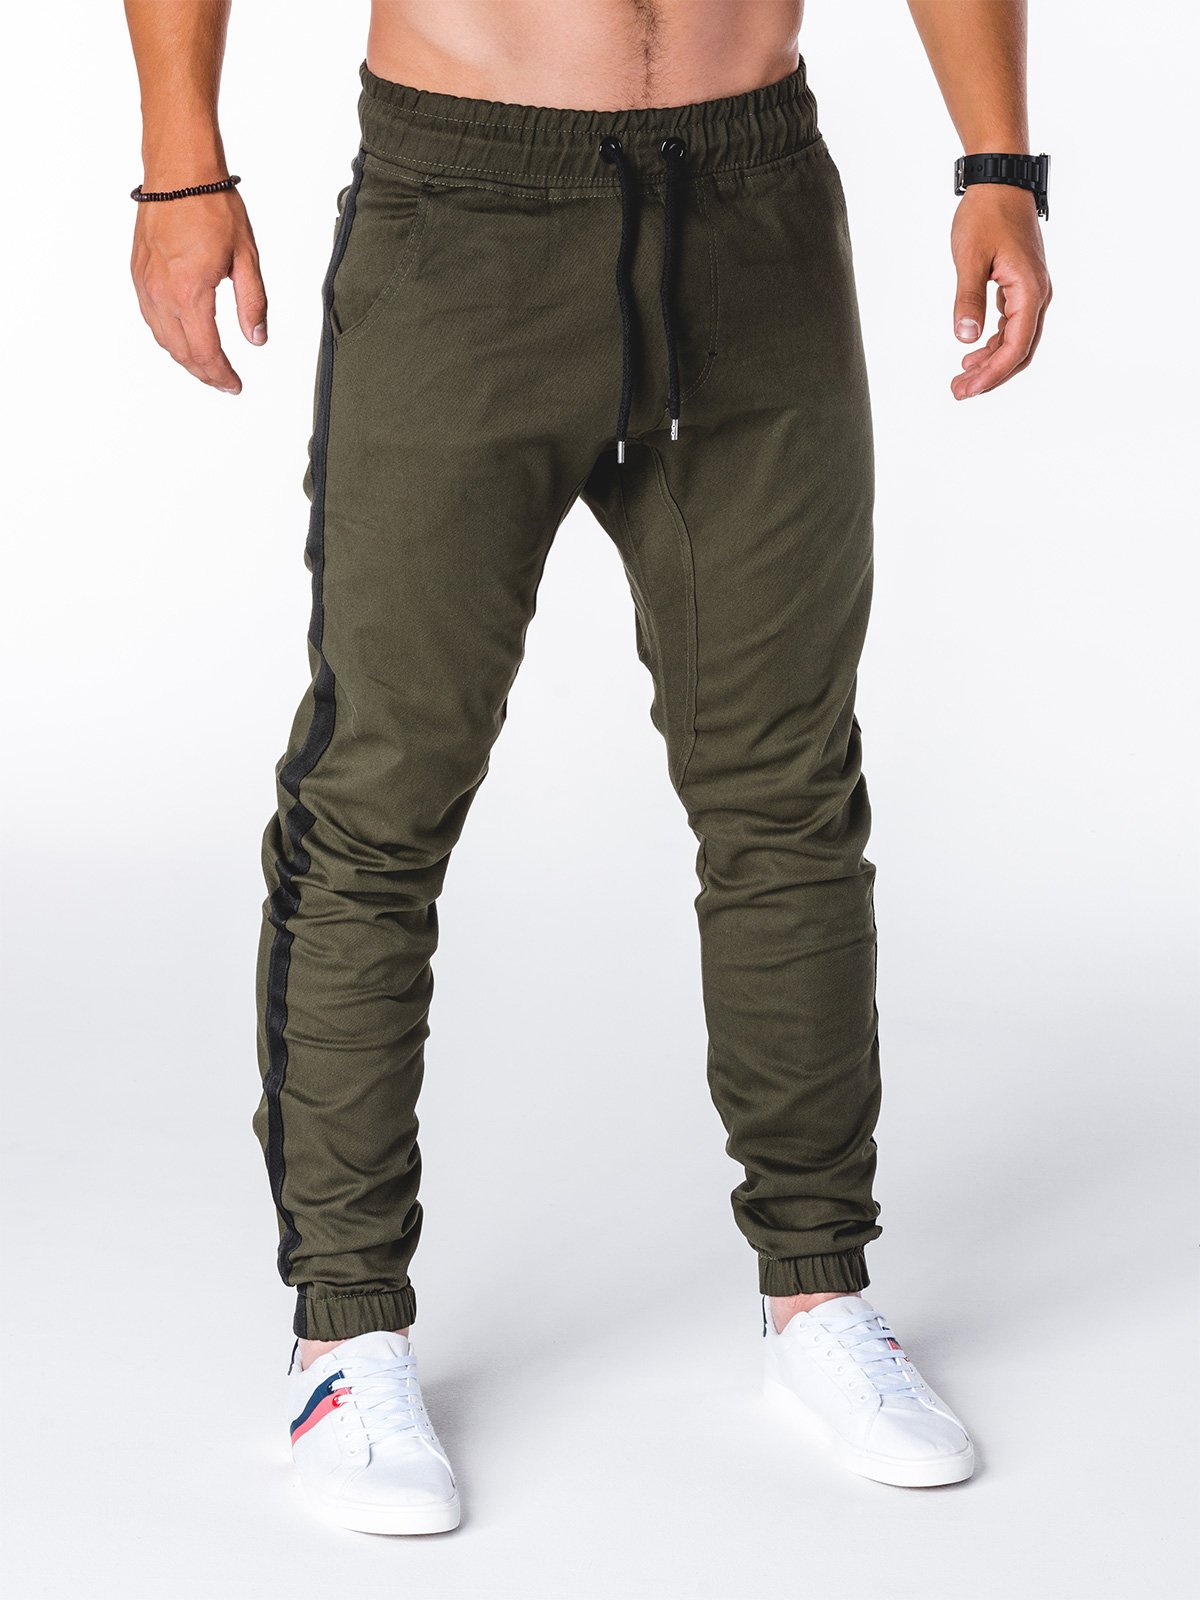 Men's pants joggers P670 - khaki | MODONE wholesale - Clothing For Men